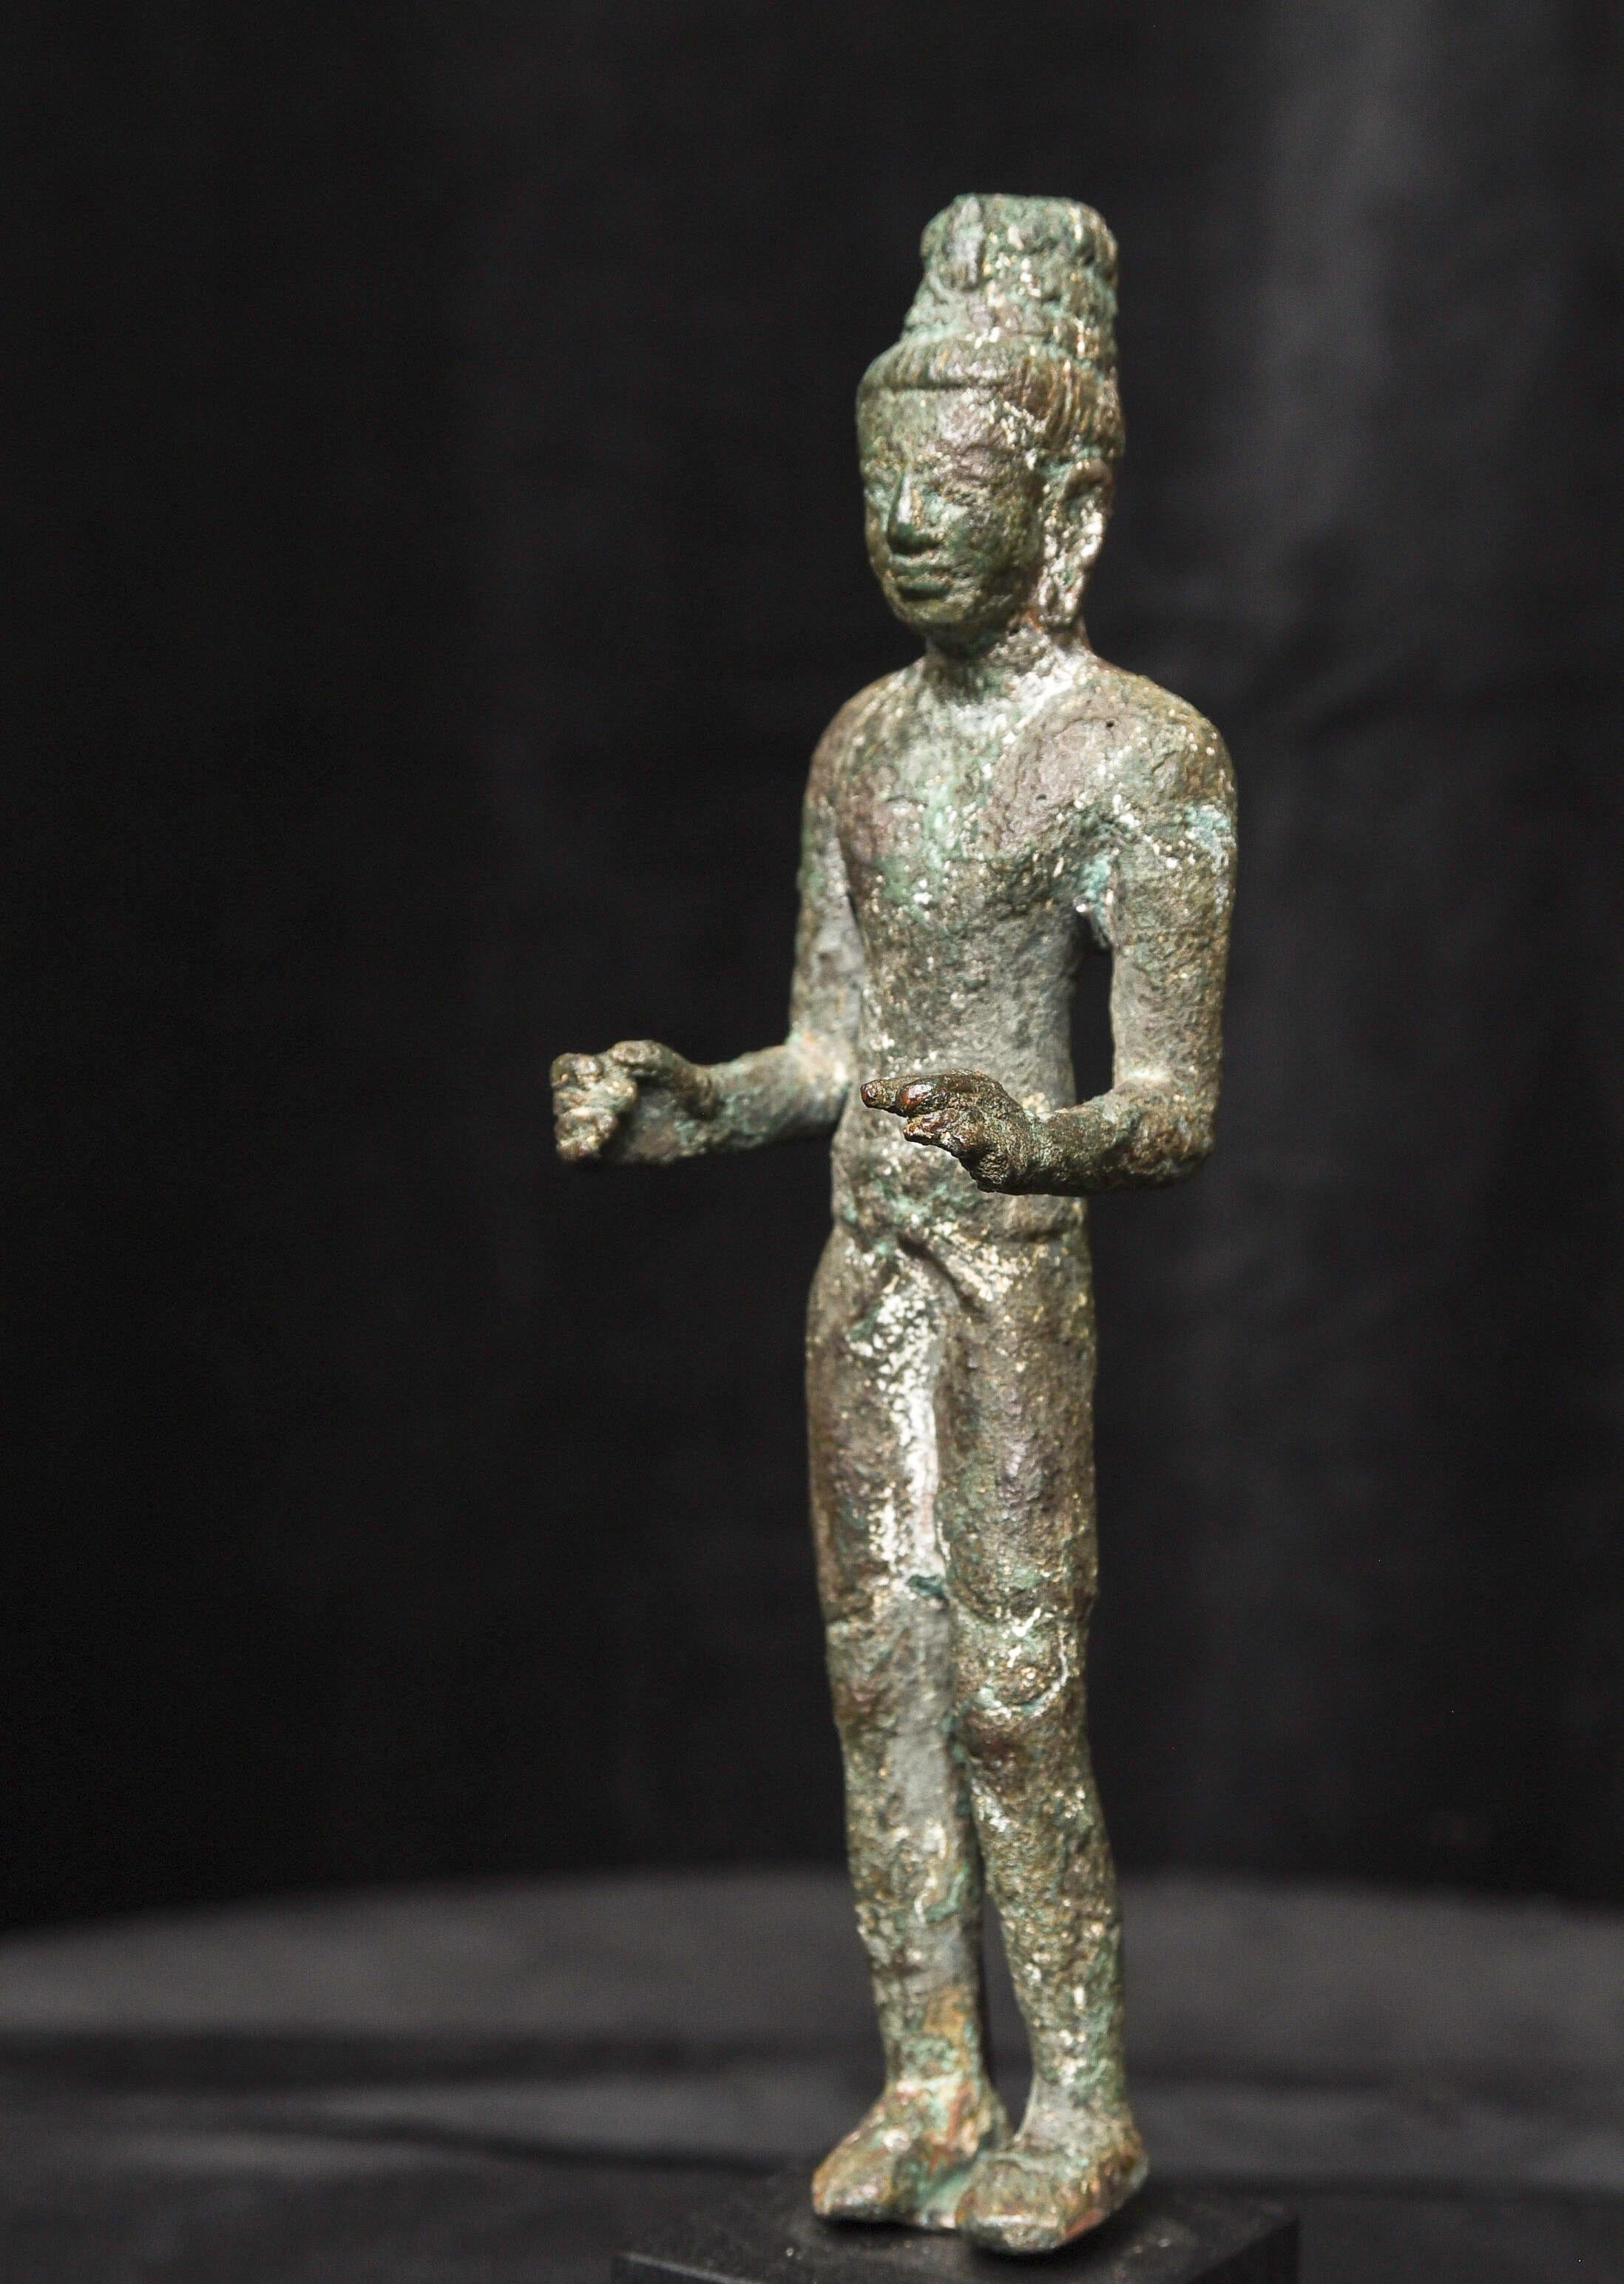 7th/9thC Solid-Cast Bronze Prakhon Chai Buddha or Bodhisattva - 9688 For Sale 4